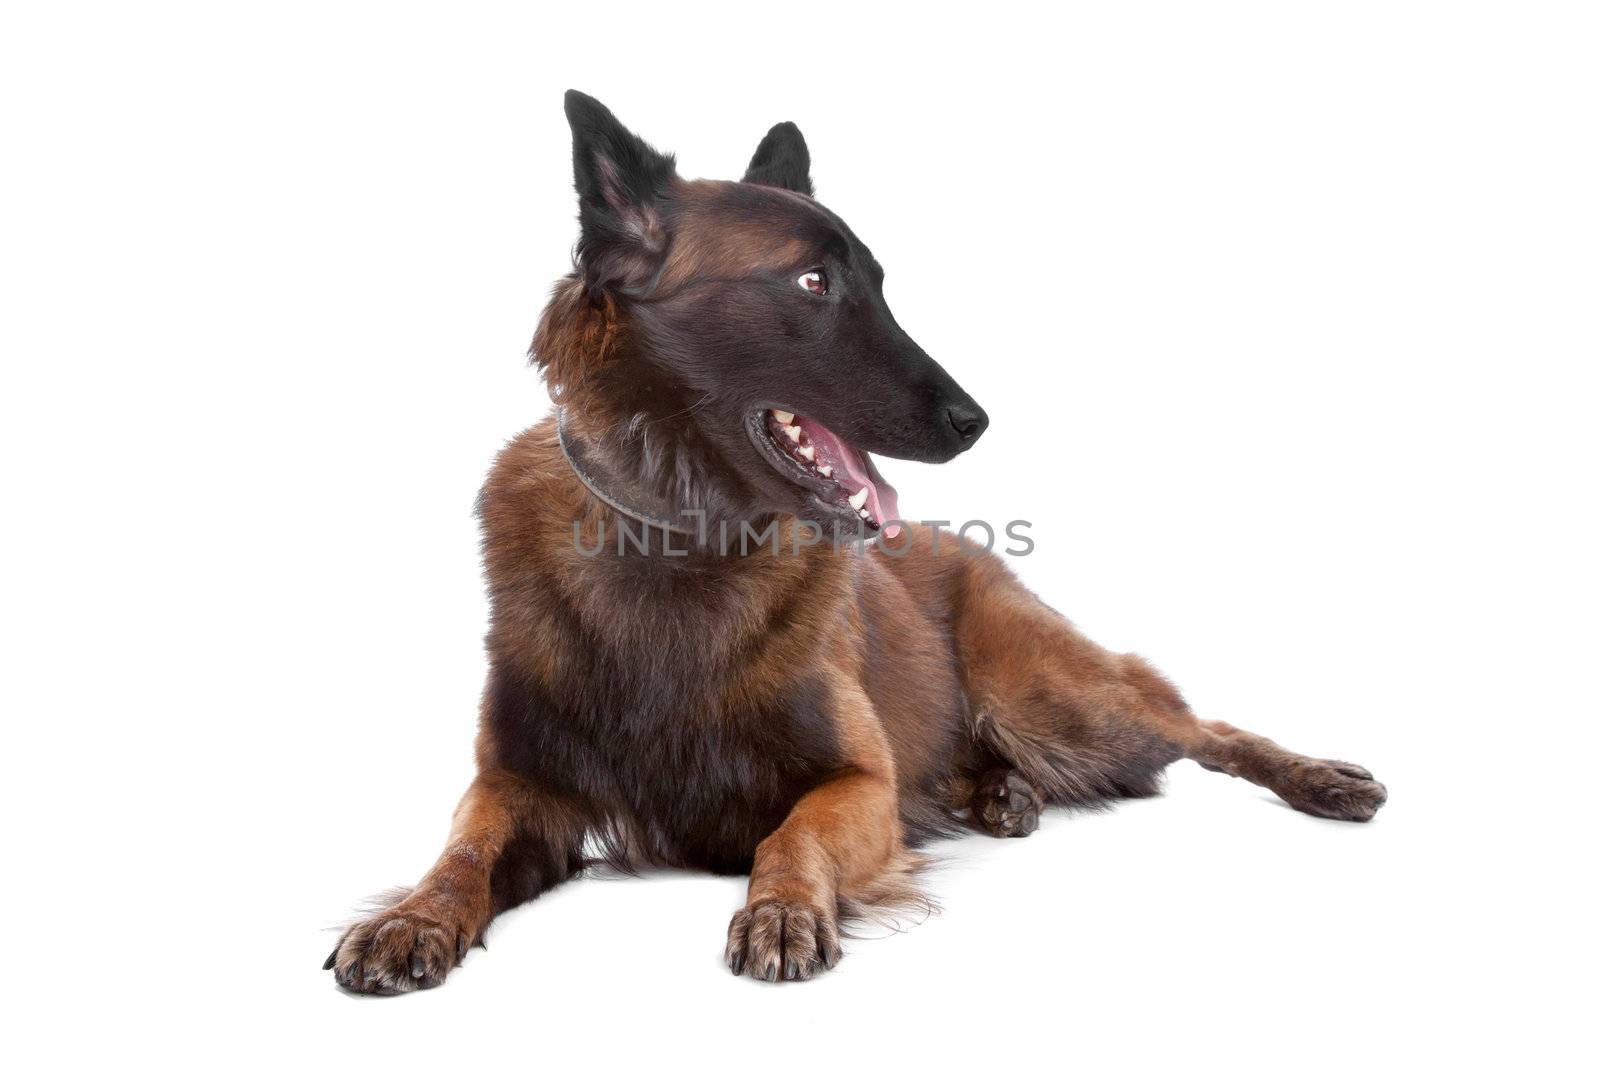 Belgium Shepherd dog by eriklam